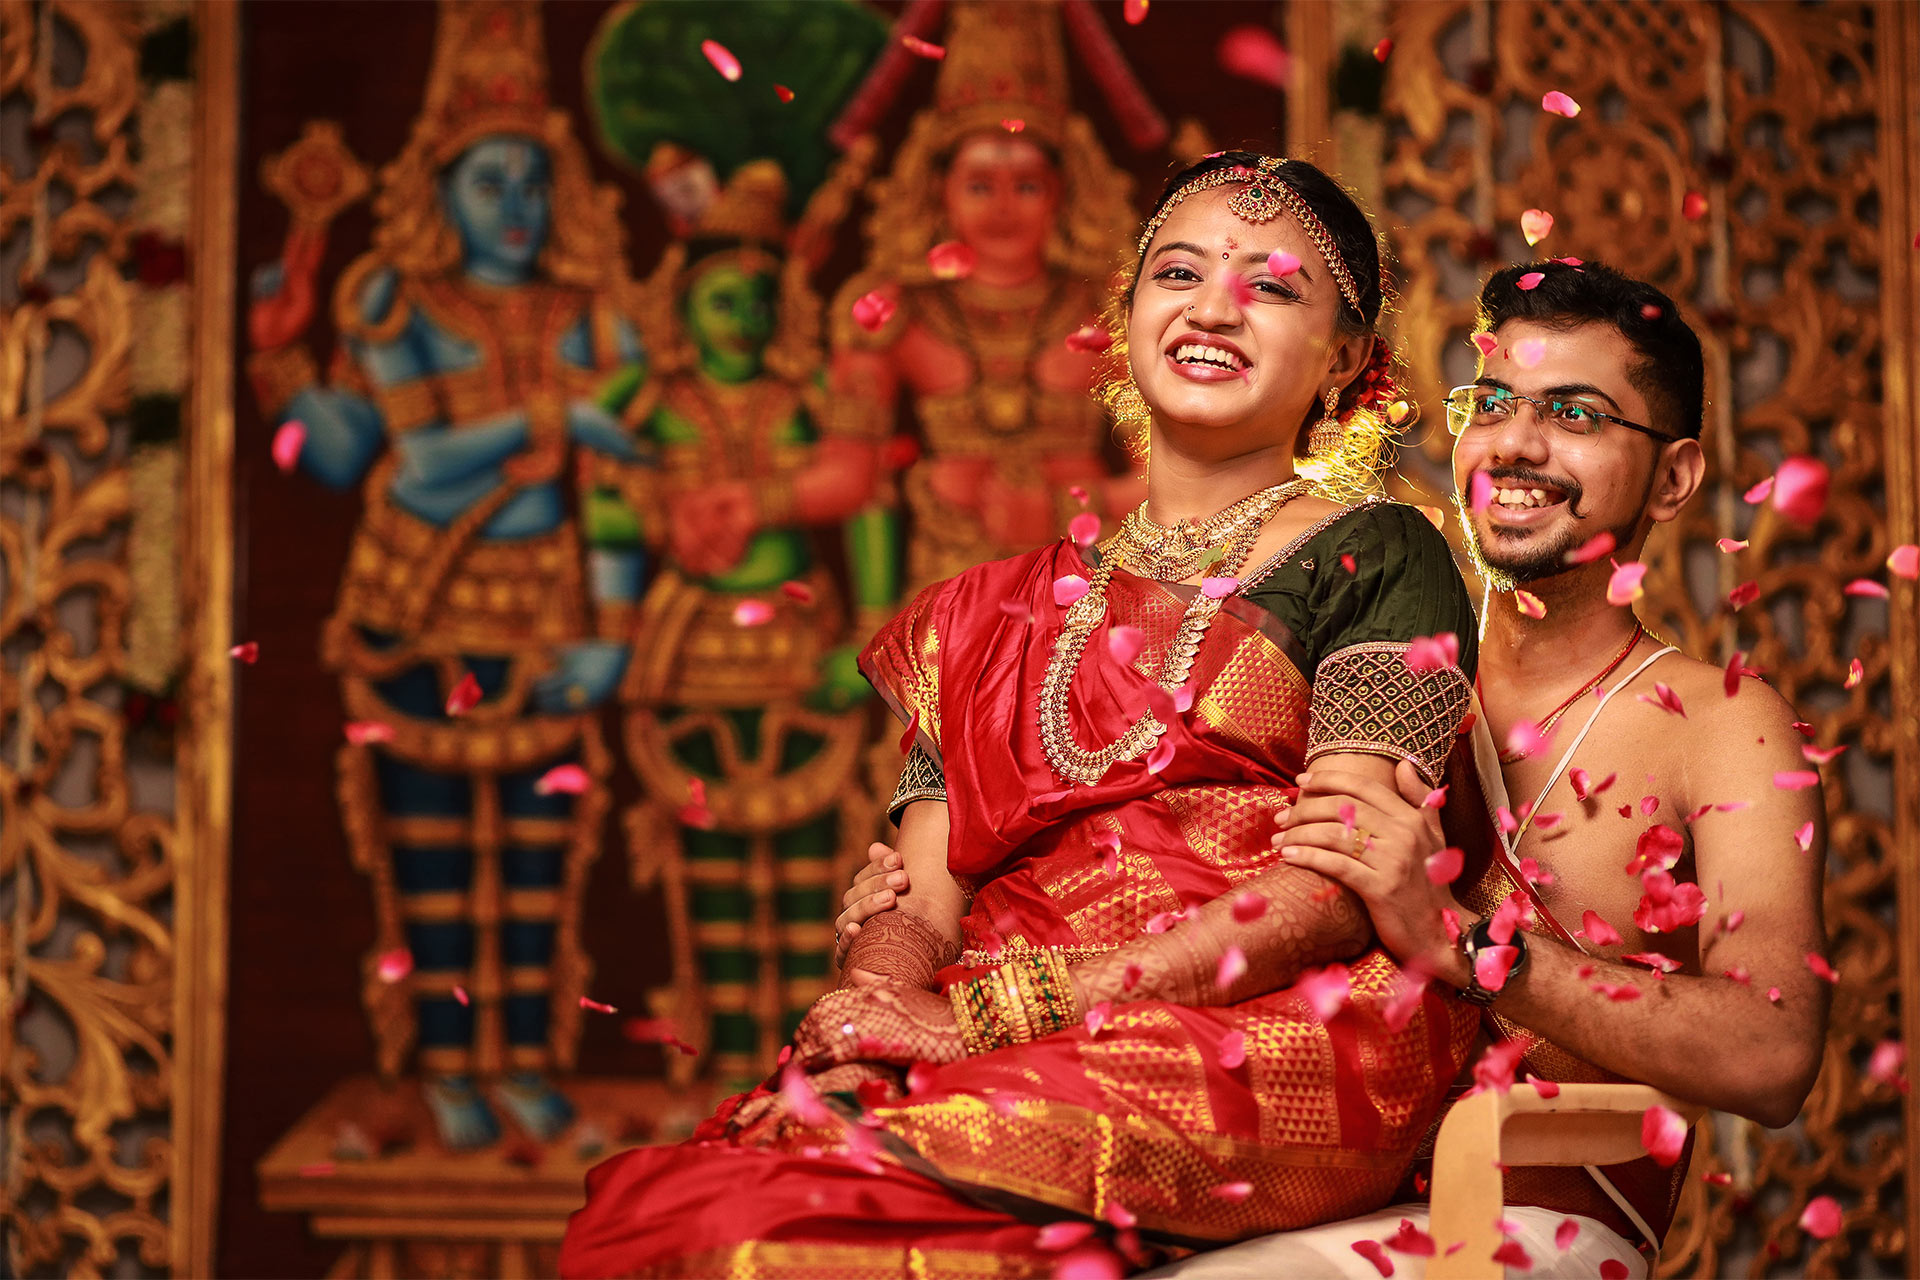 Kiransa Photography - Best Wedding & Candid Photographer in Chennai |  BookEventZ